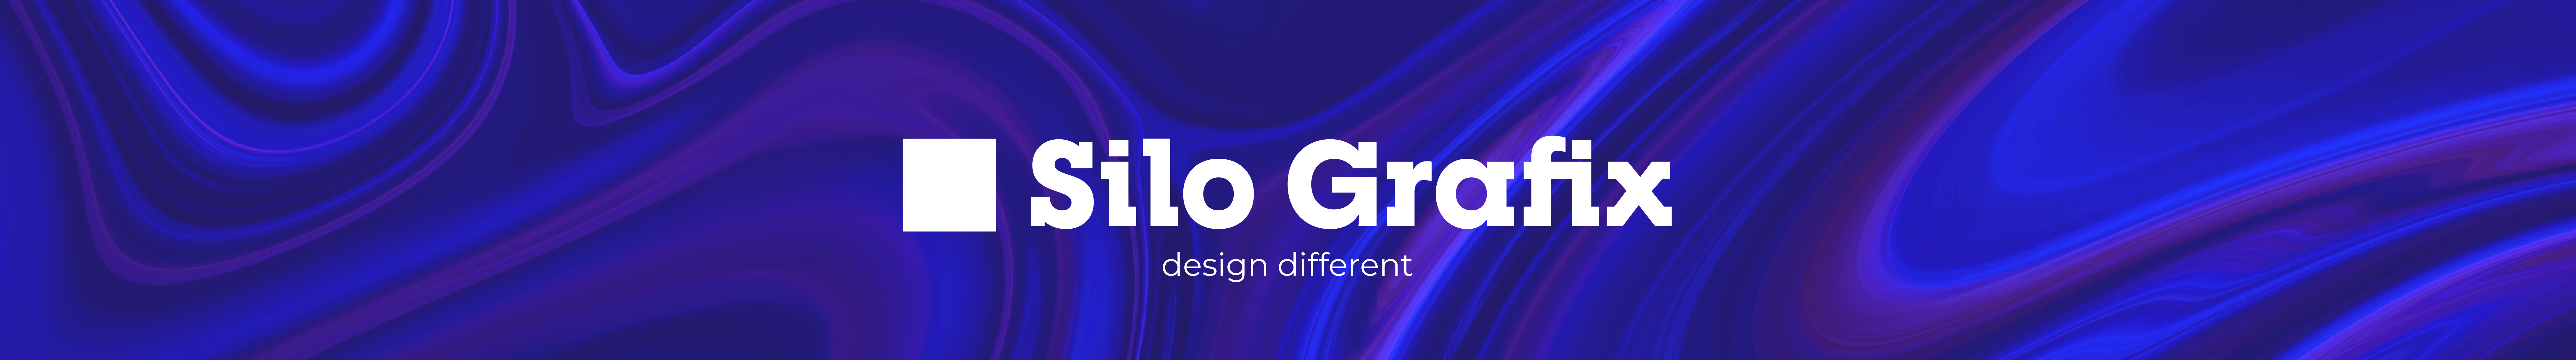 Banner profilu uživatele Silo Grafix